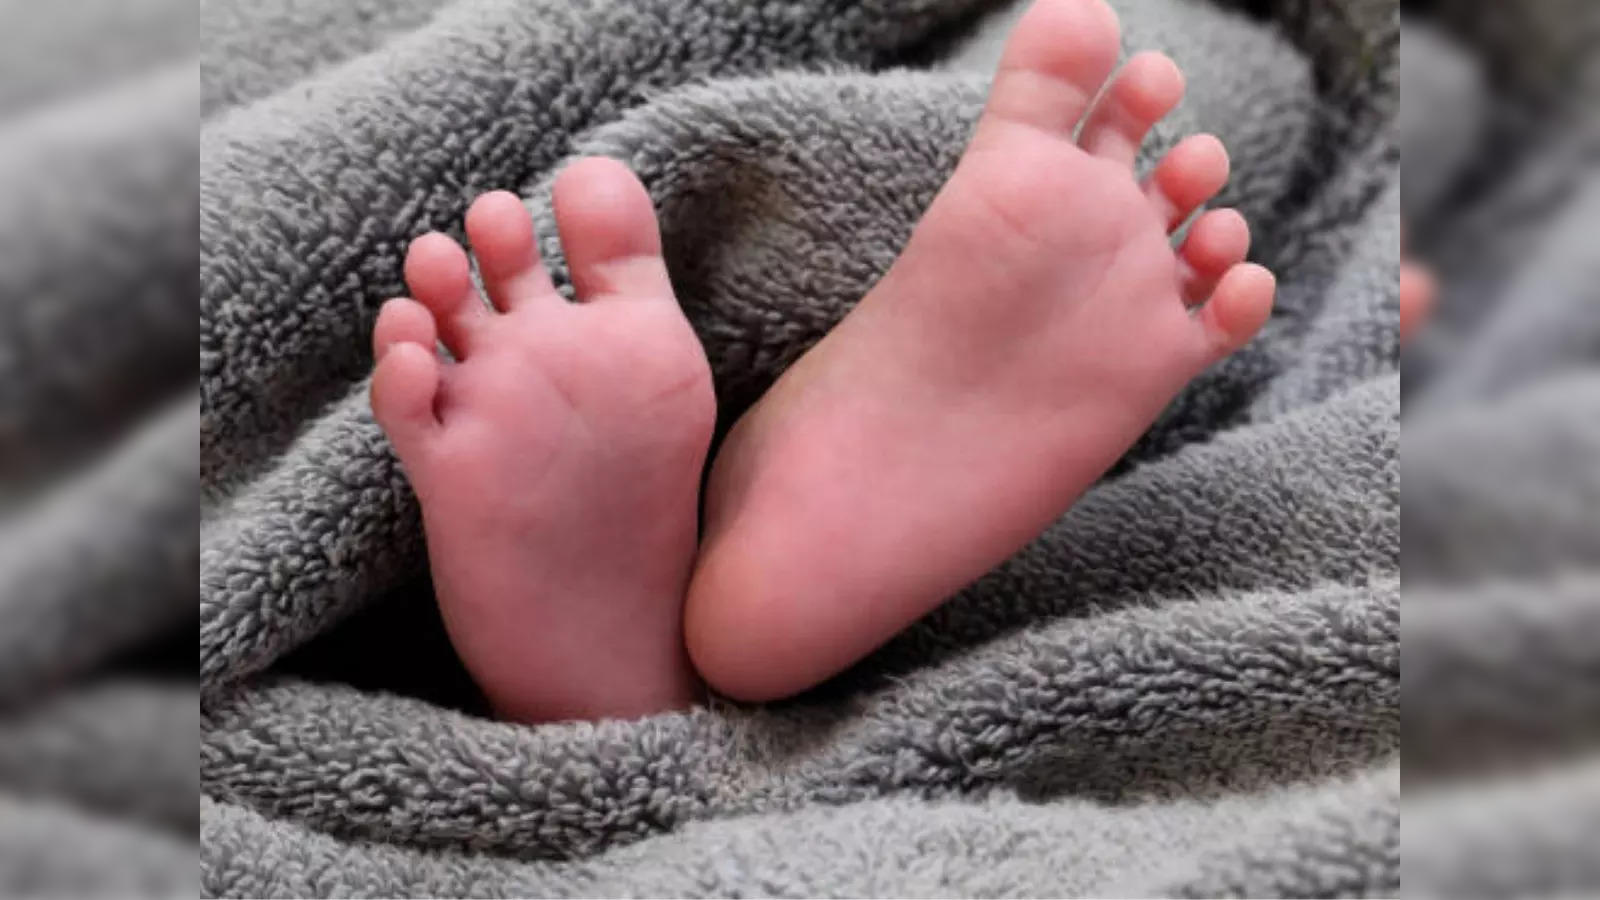 Bihar Infant News: Doctors find a developing foetus inside stomach